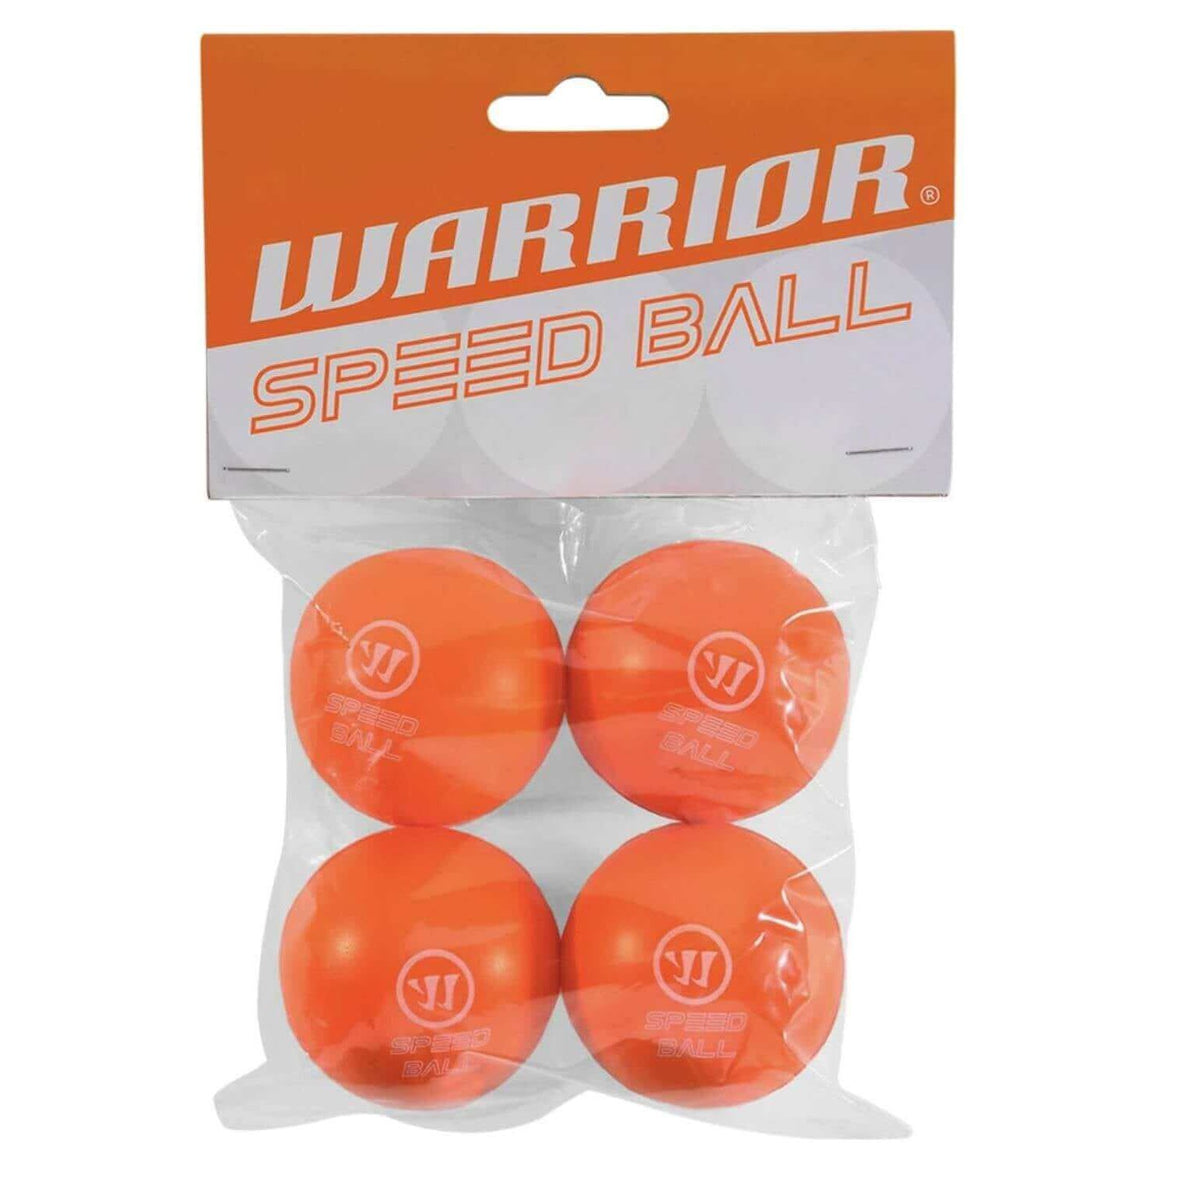 Warrior Speed Ball (4 Pack)